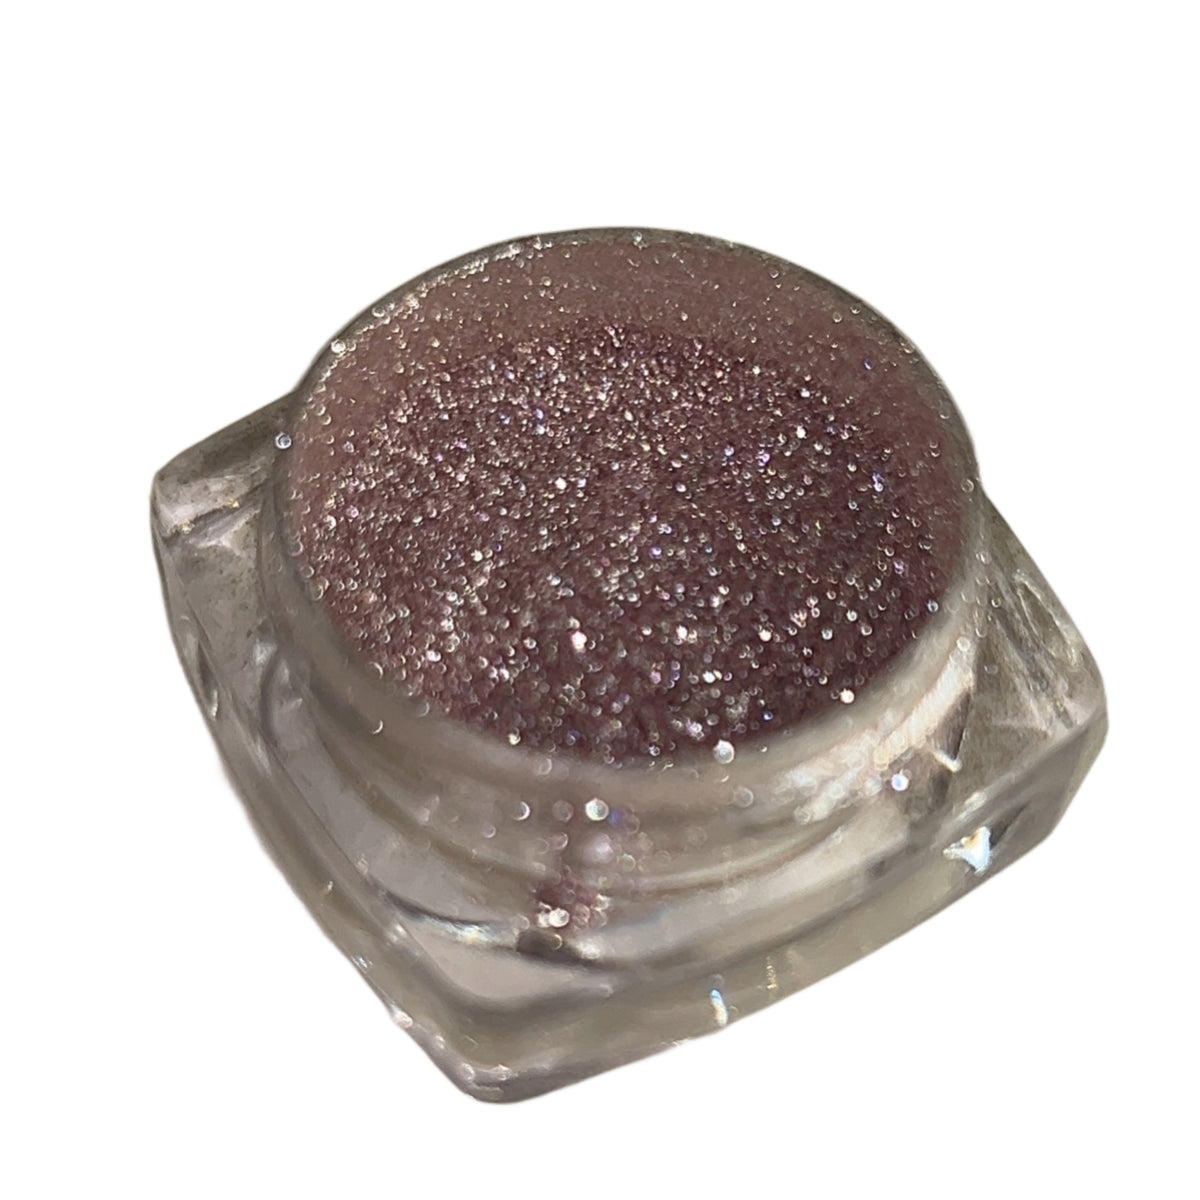 Magical Makeup Mink Sparkling Diamonds Loose Pigment 0.5g